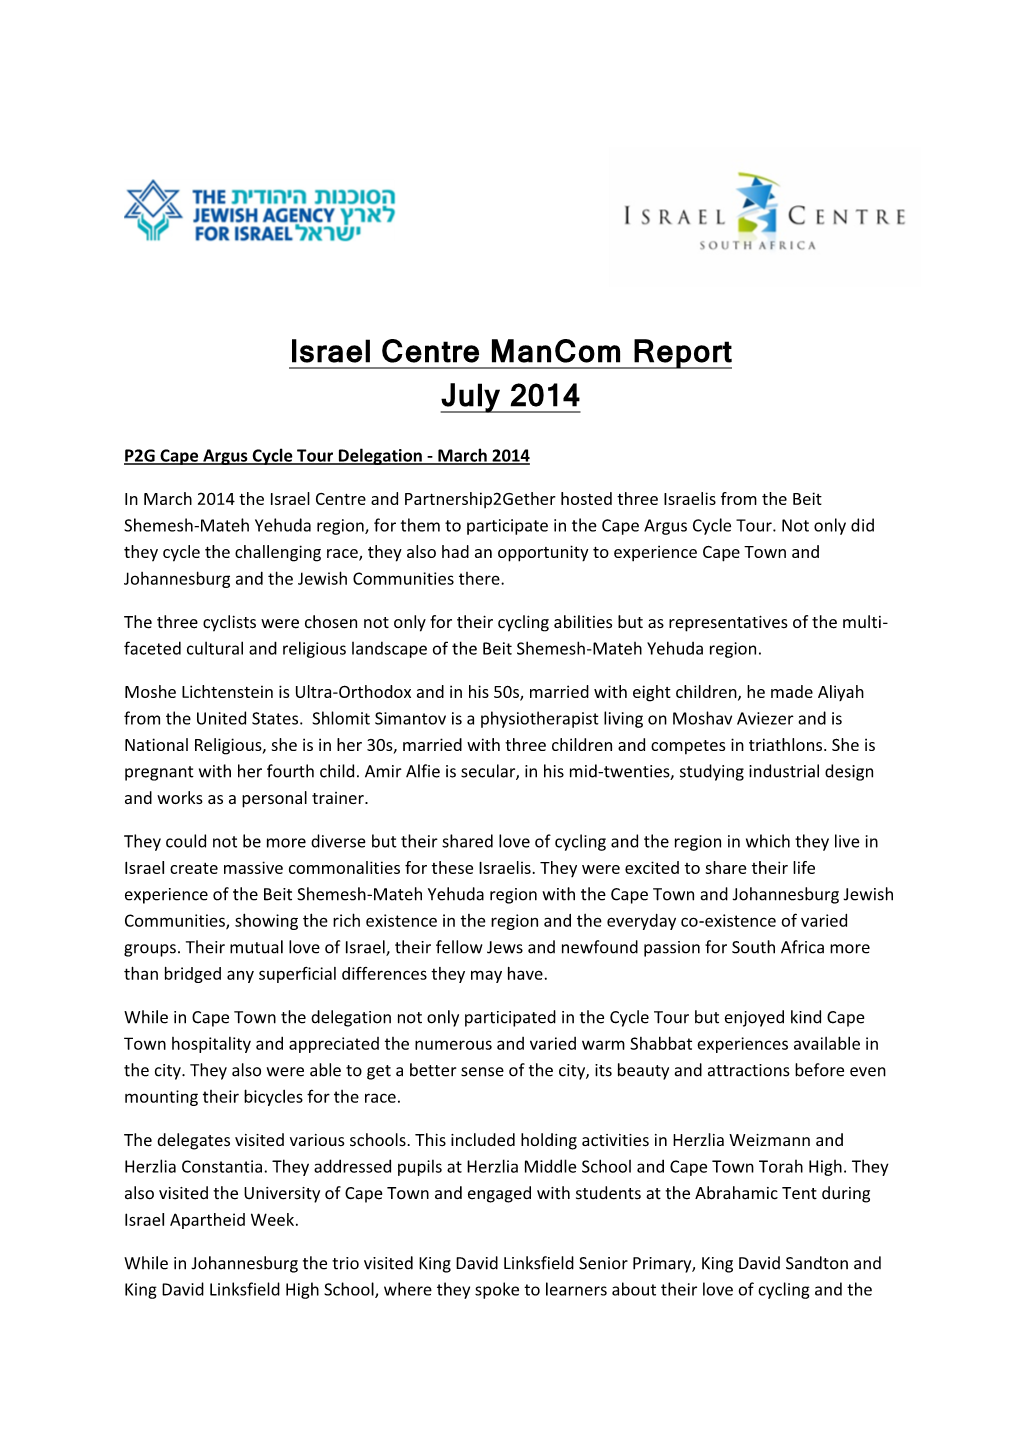 Israel Centre Mancom Report July 2014